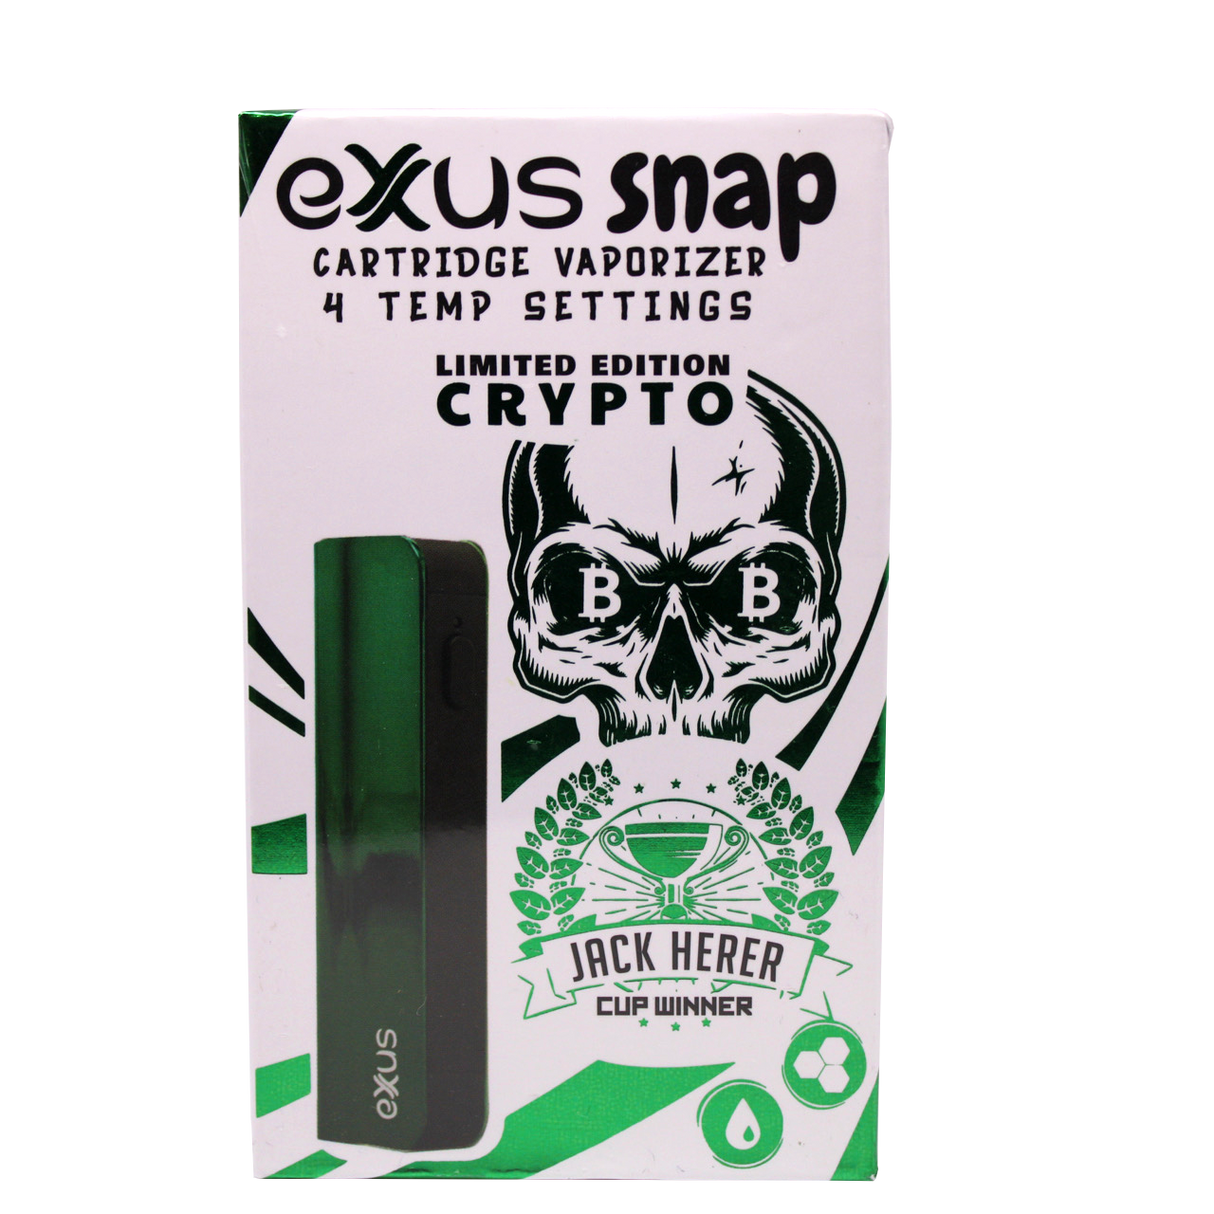 Exxus - Snap Cartridge Vaporizer 4 Temp Settings